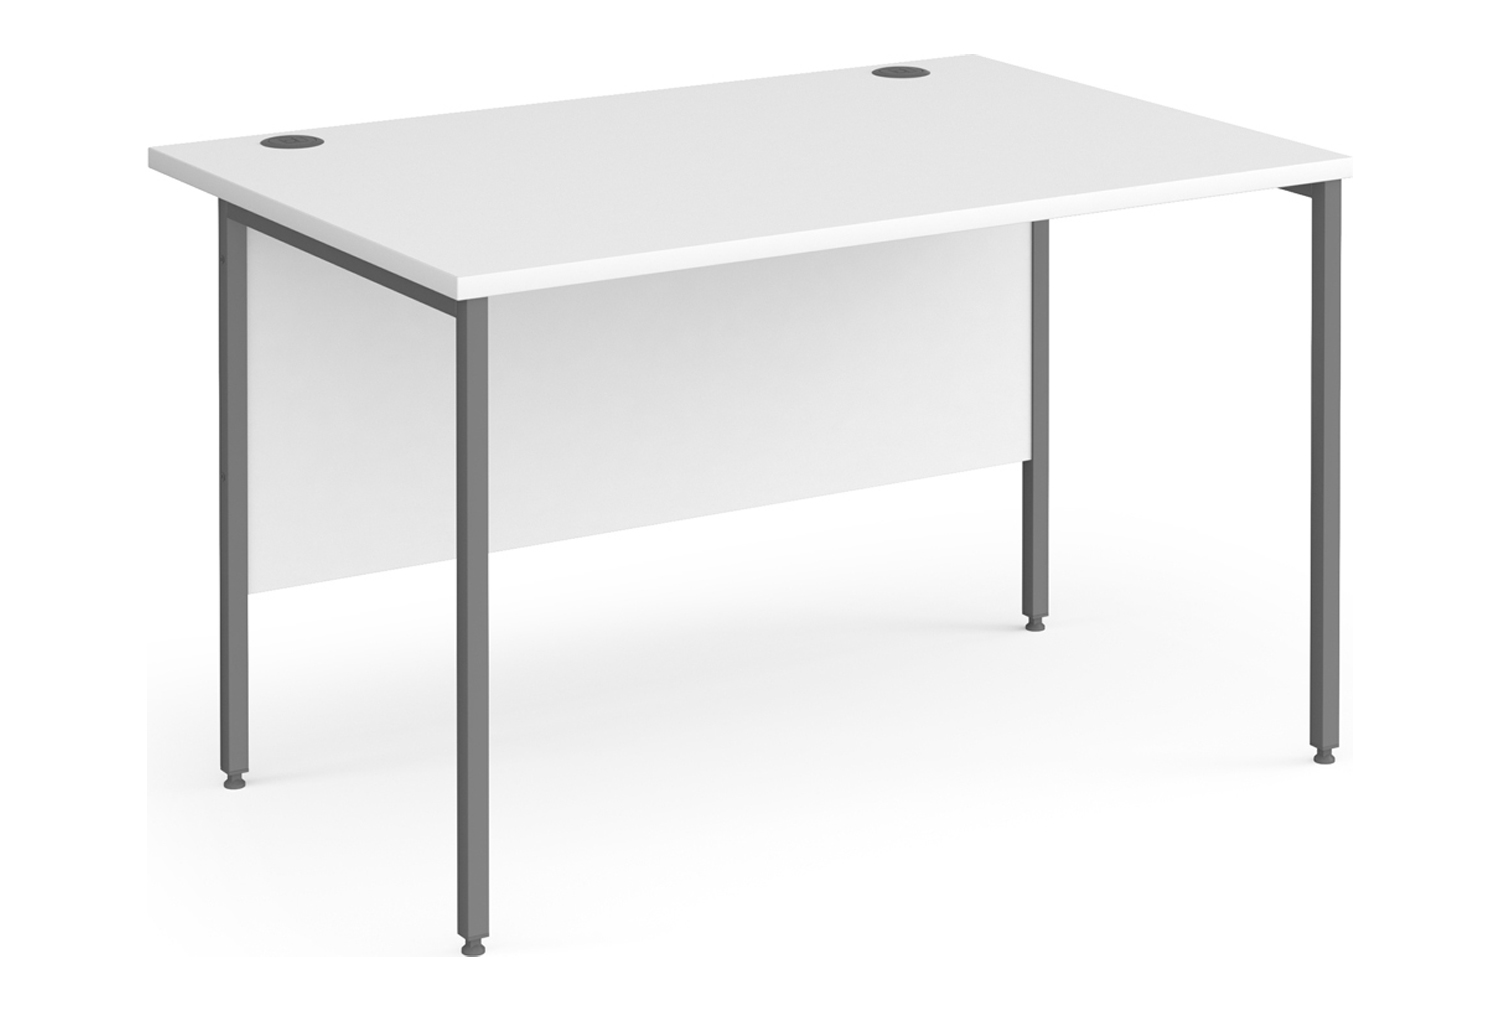 Value Line Classic+ Rectangular H-Leg Office Desk (Graphite Leg), 120wx80dx73h (cm), White, Express Delivery